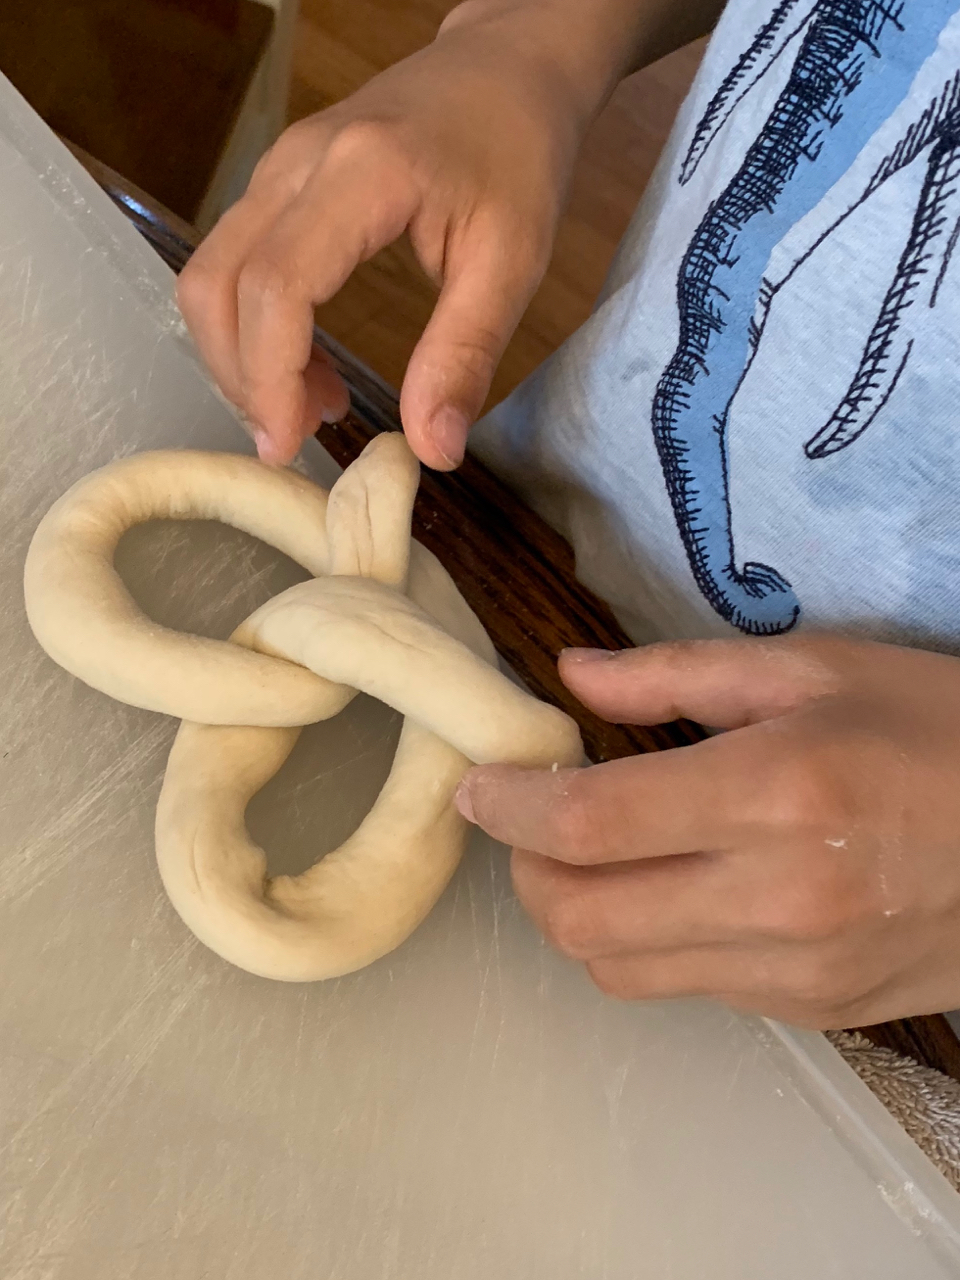 Twisting the pretzel